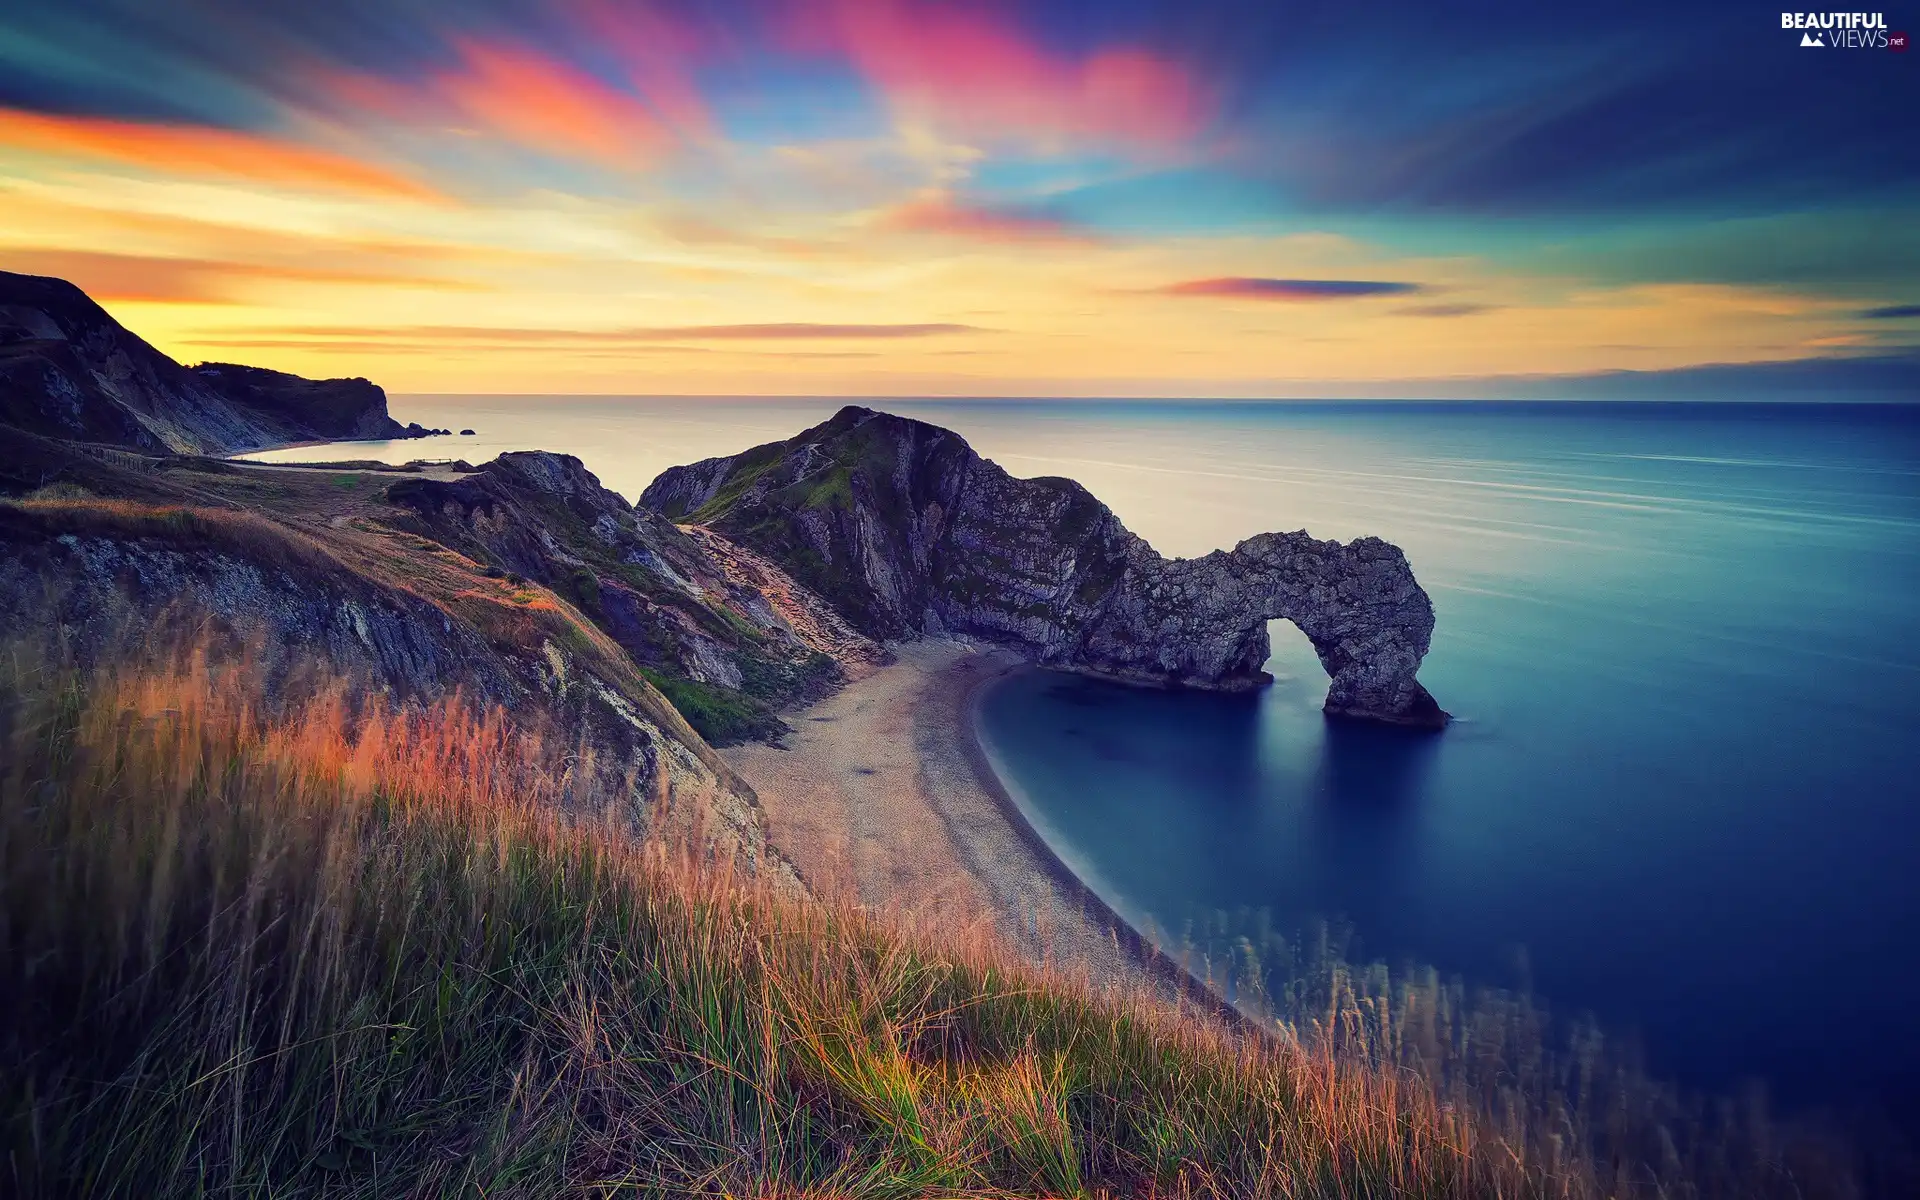 Limestone Durdle Door, sea, rocks, Jurassic Coast, England, Great Sunsets, Beaches